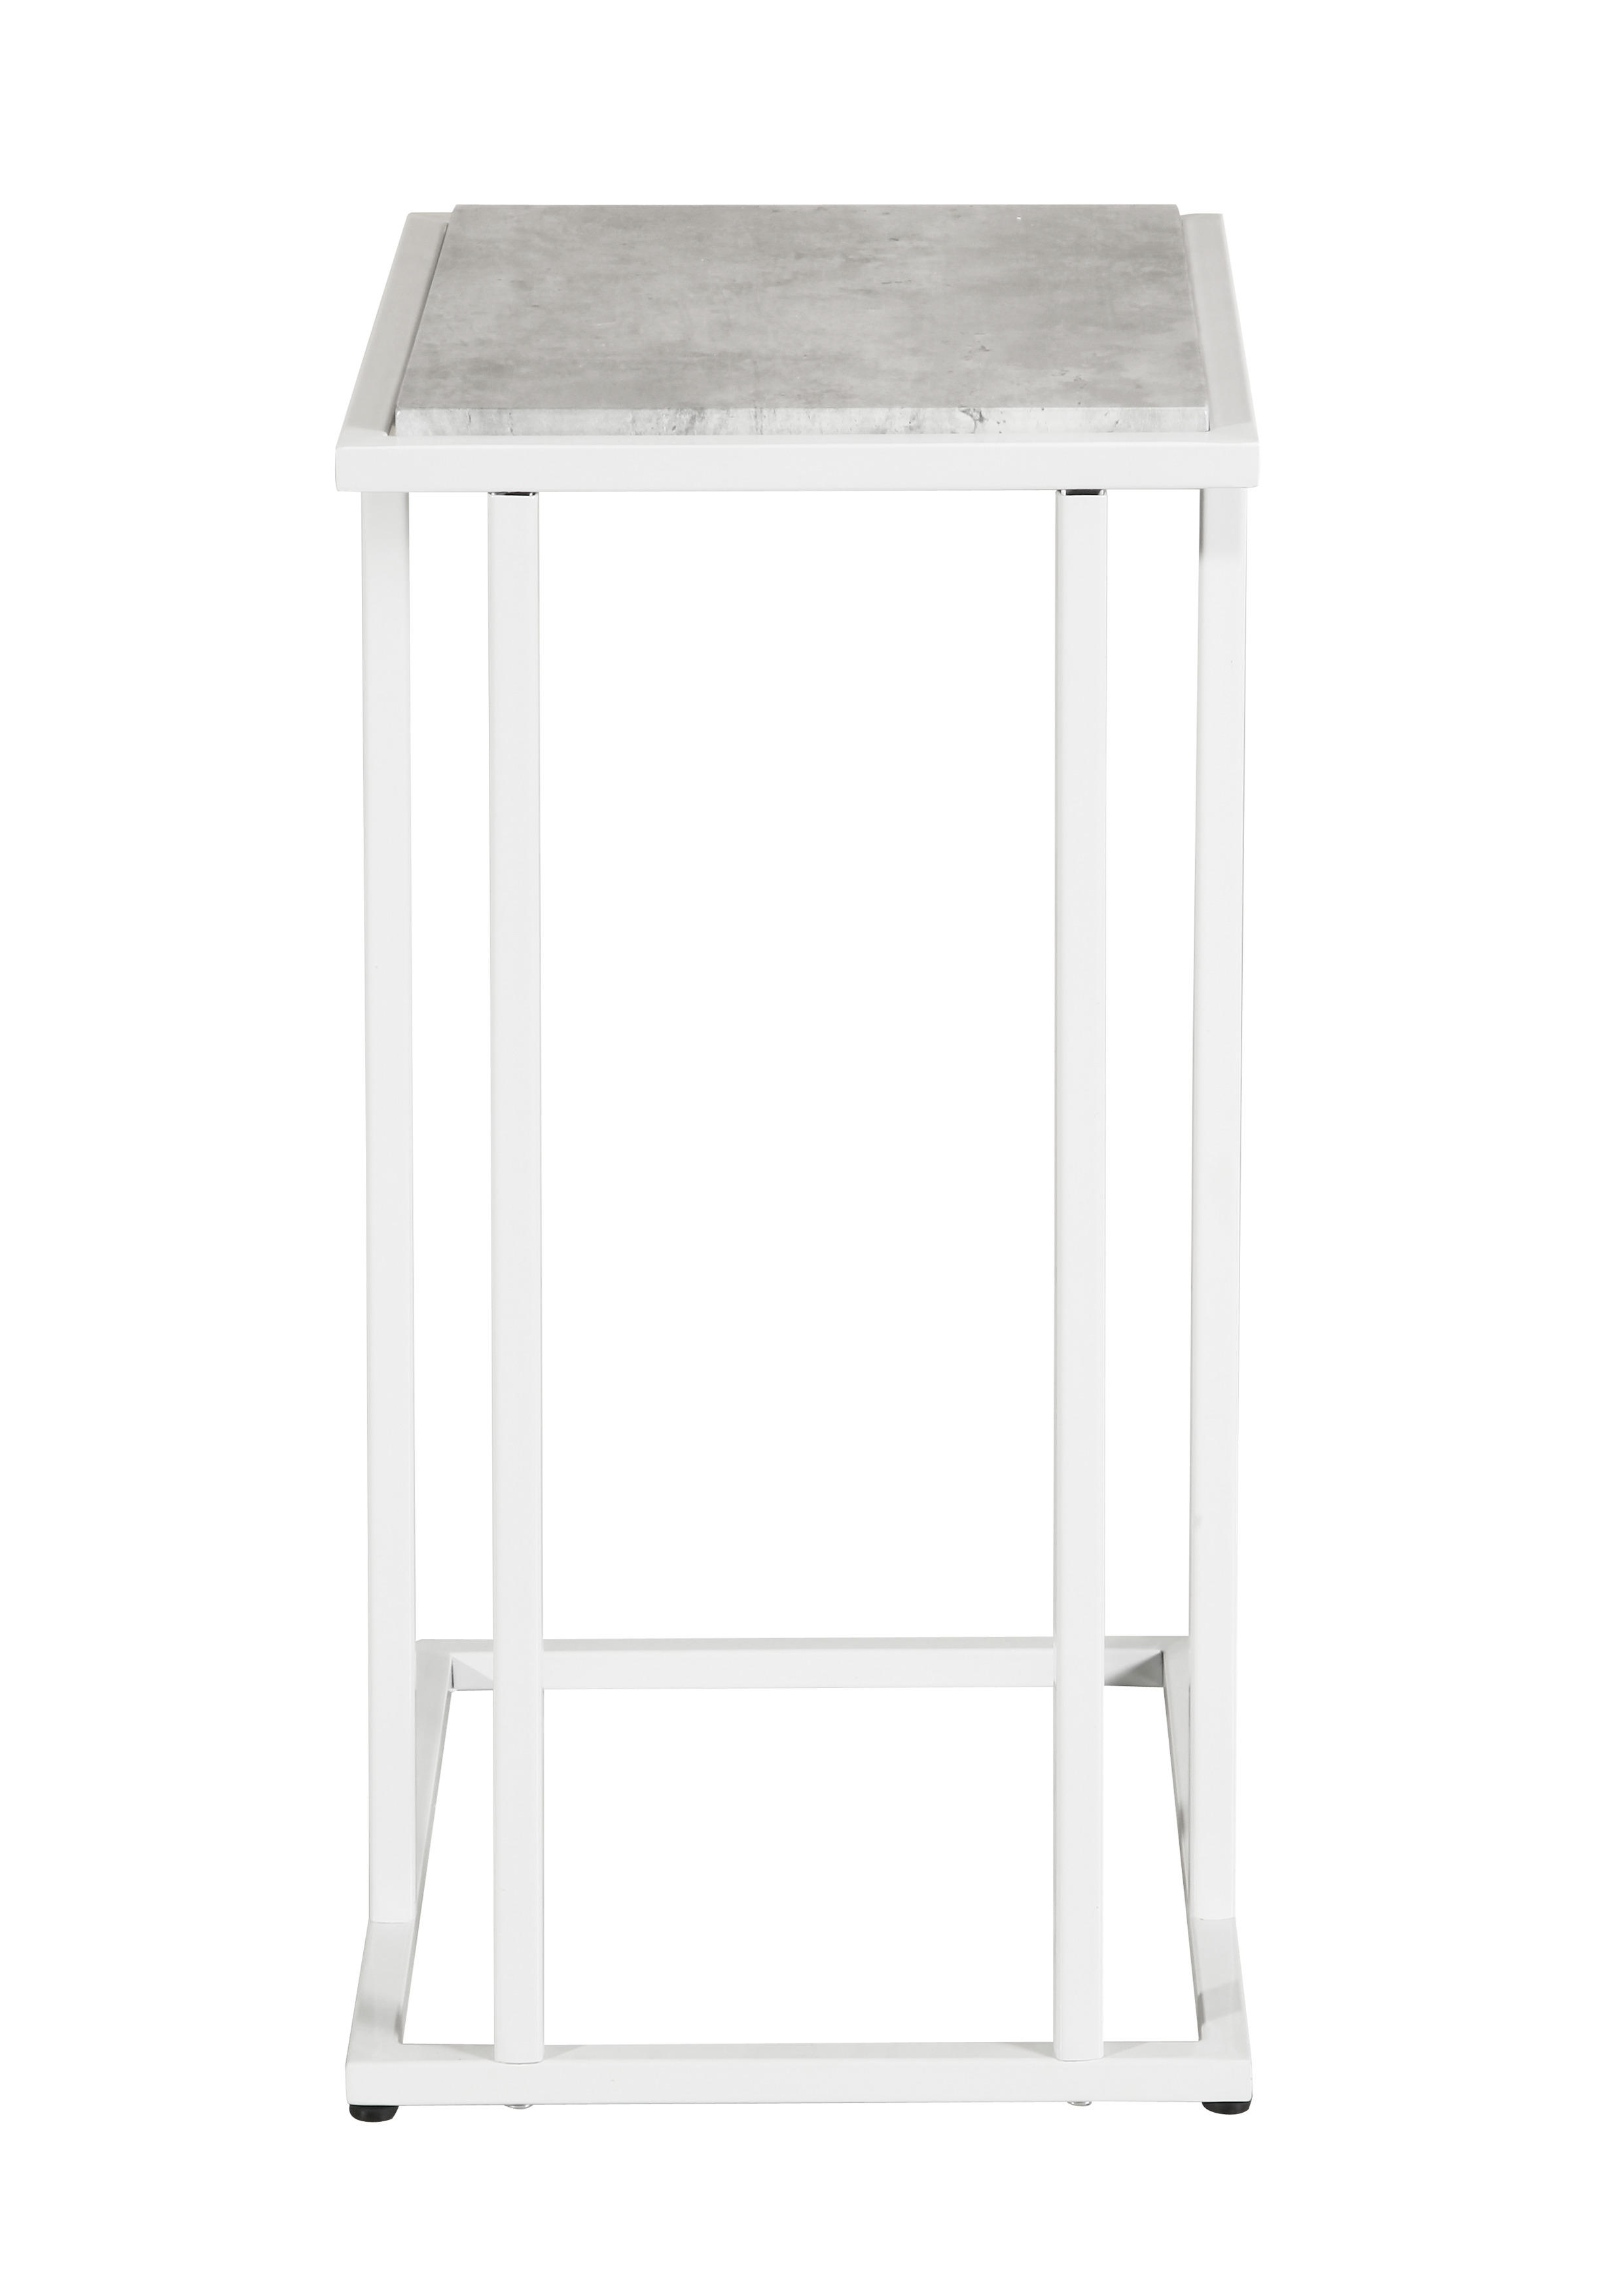 BEISTELLTISCH rechteckig Grau, Weiß  - Weiß/Grau, Design, Metall (40/30/60cm) - Carryhome